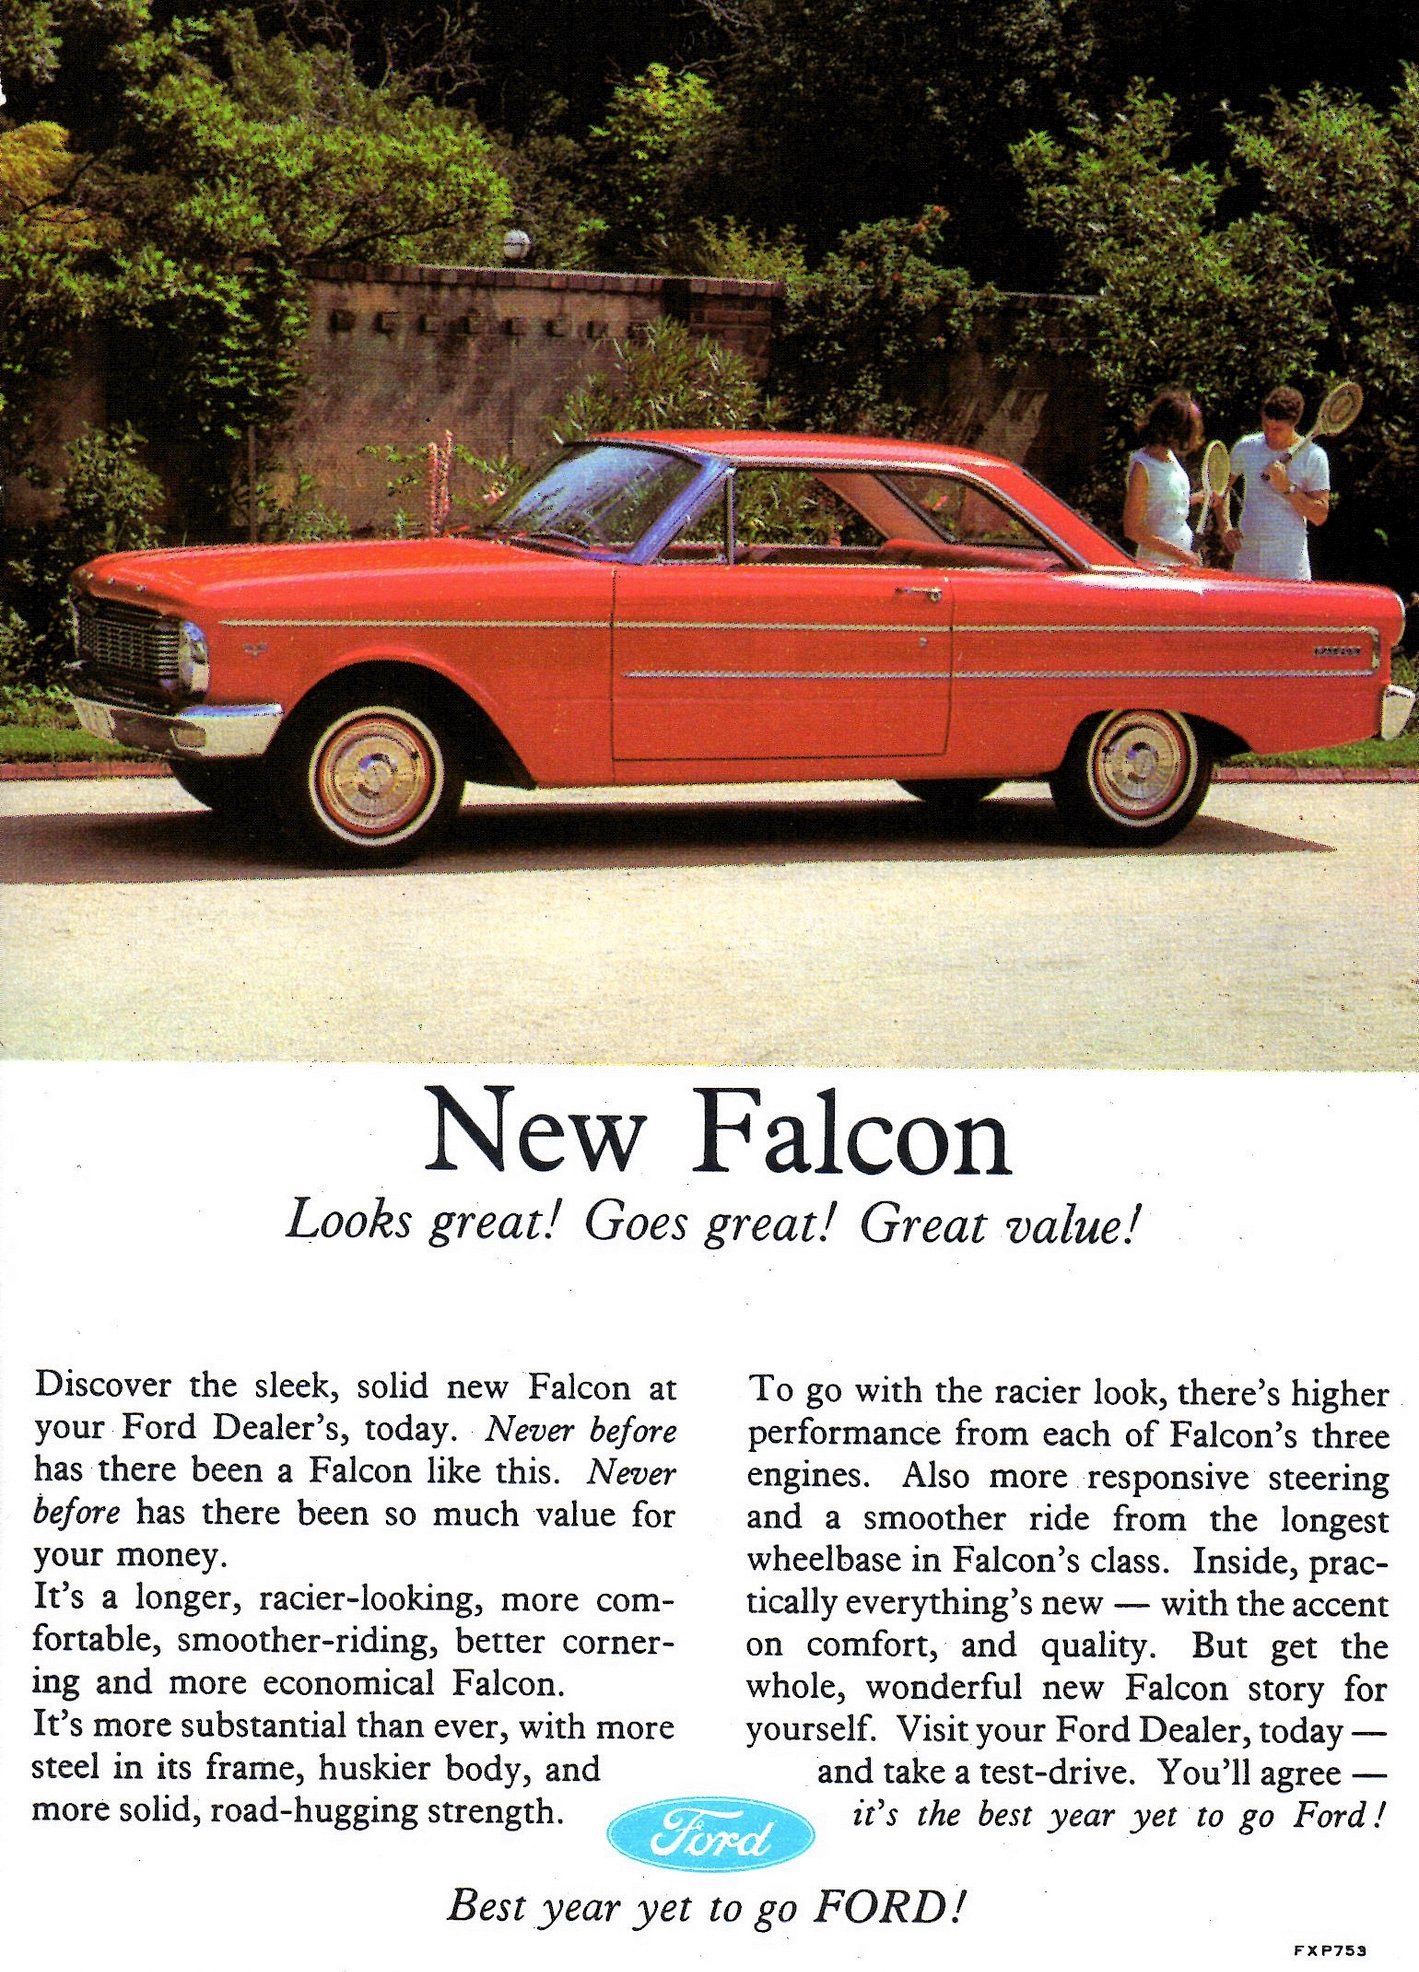 1965 XP Ford Falcon Hardtop